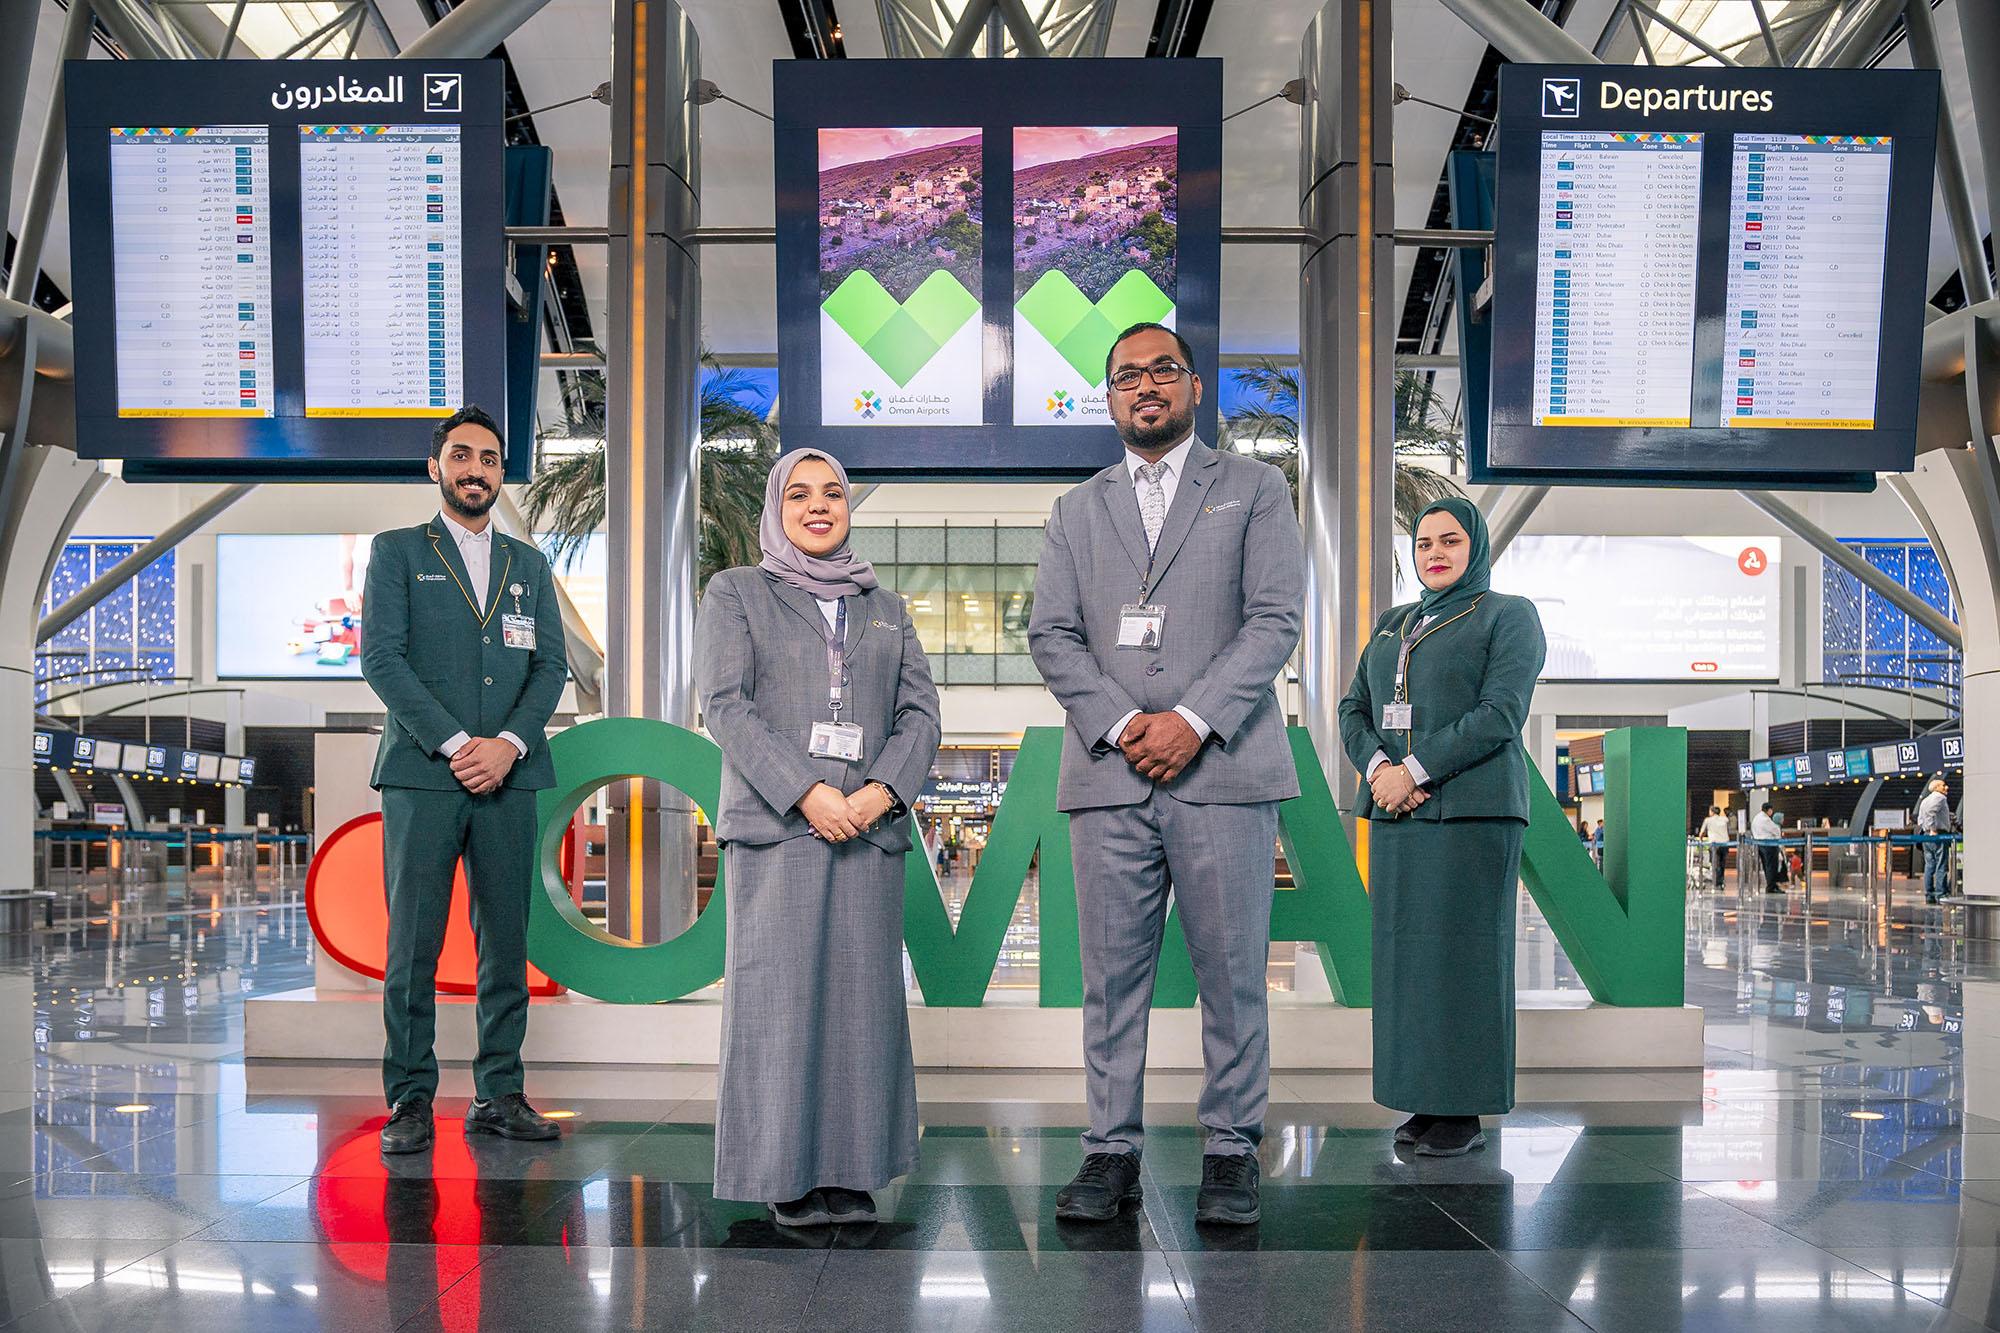 Oman Airport launches Leadership Development Program 'Qiyadat'